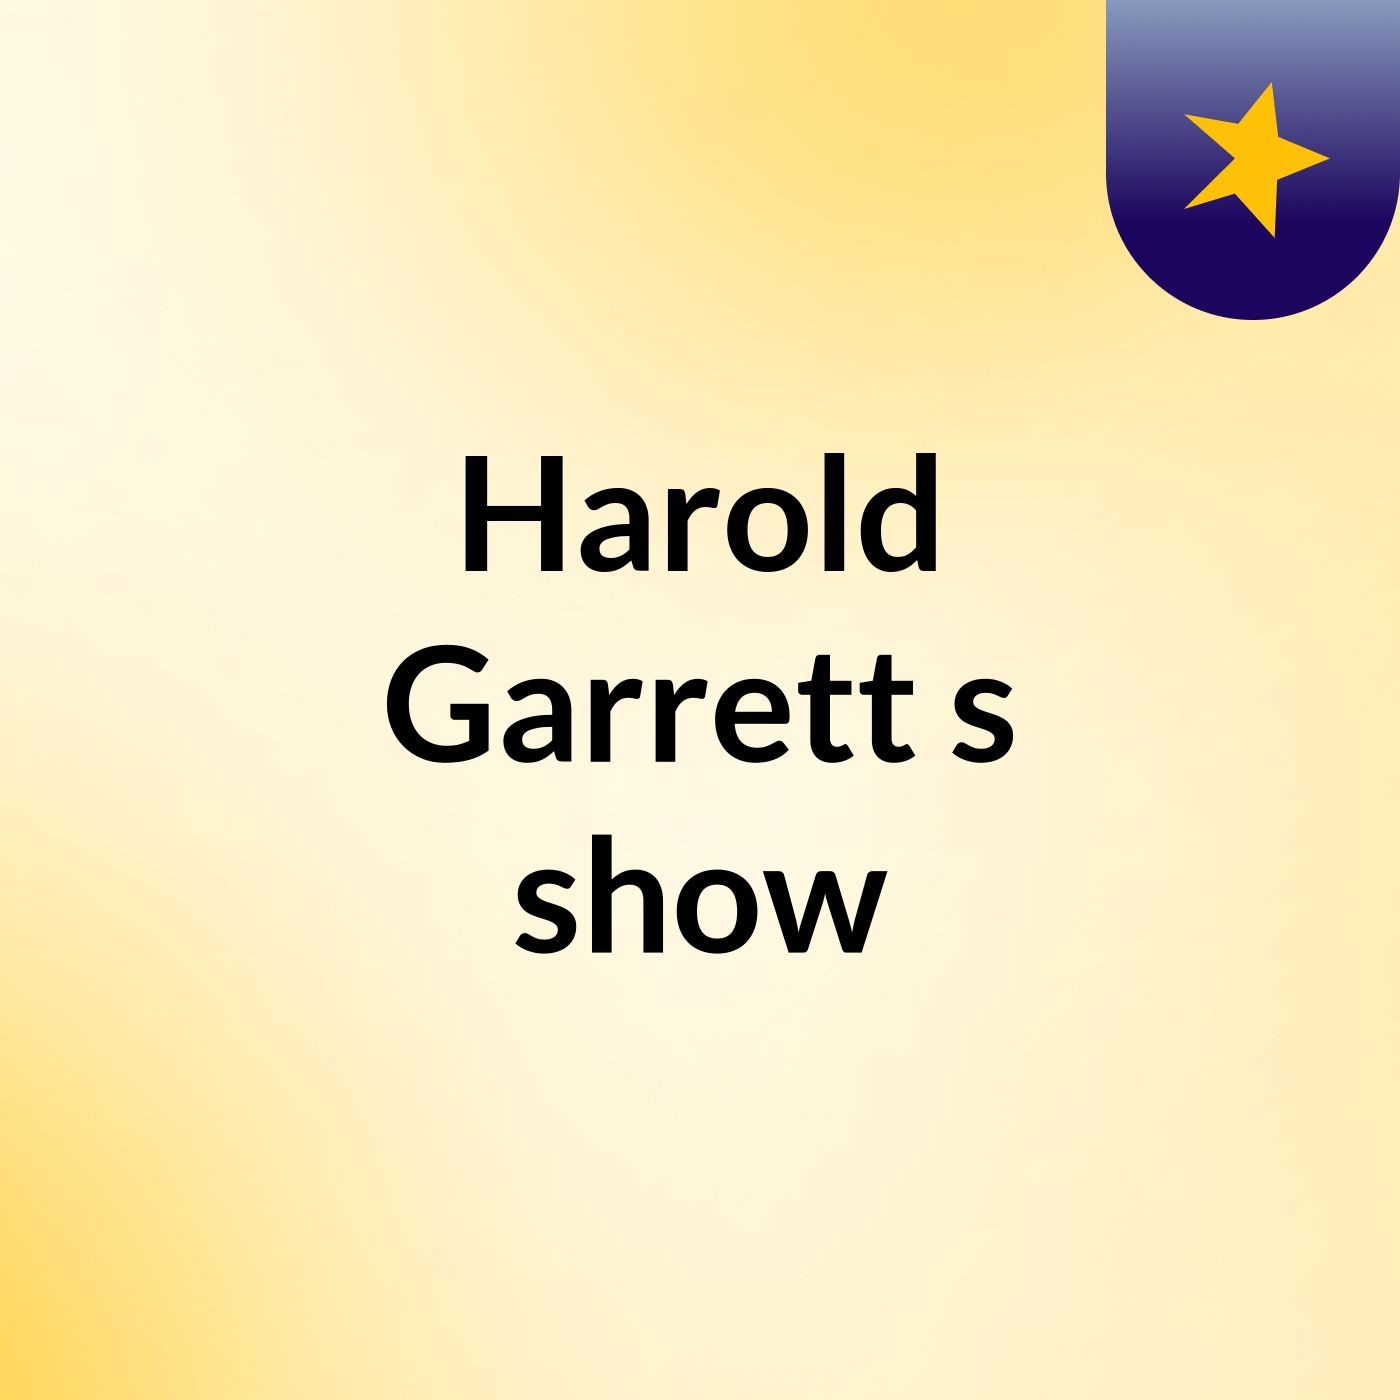 Harold Garrett's show